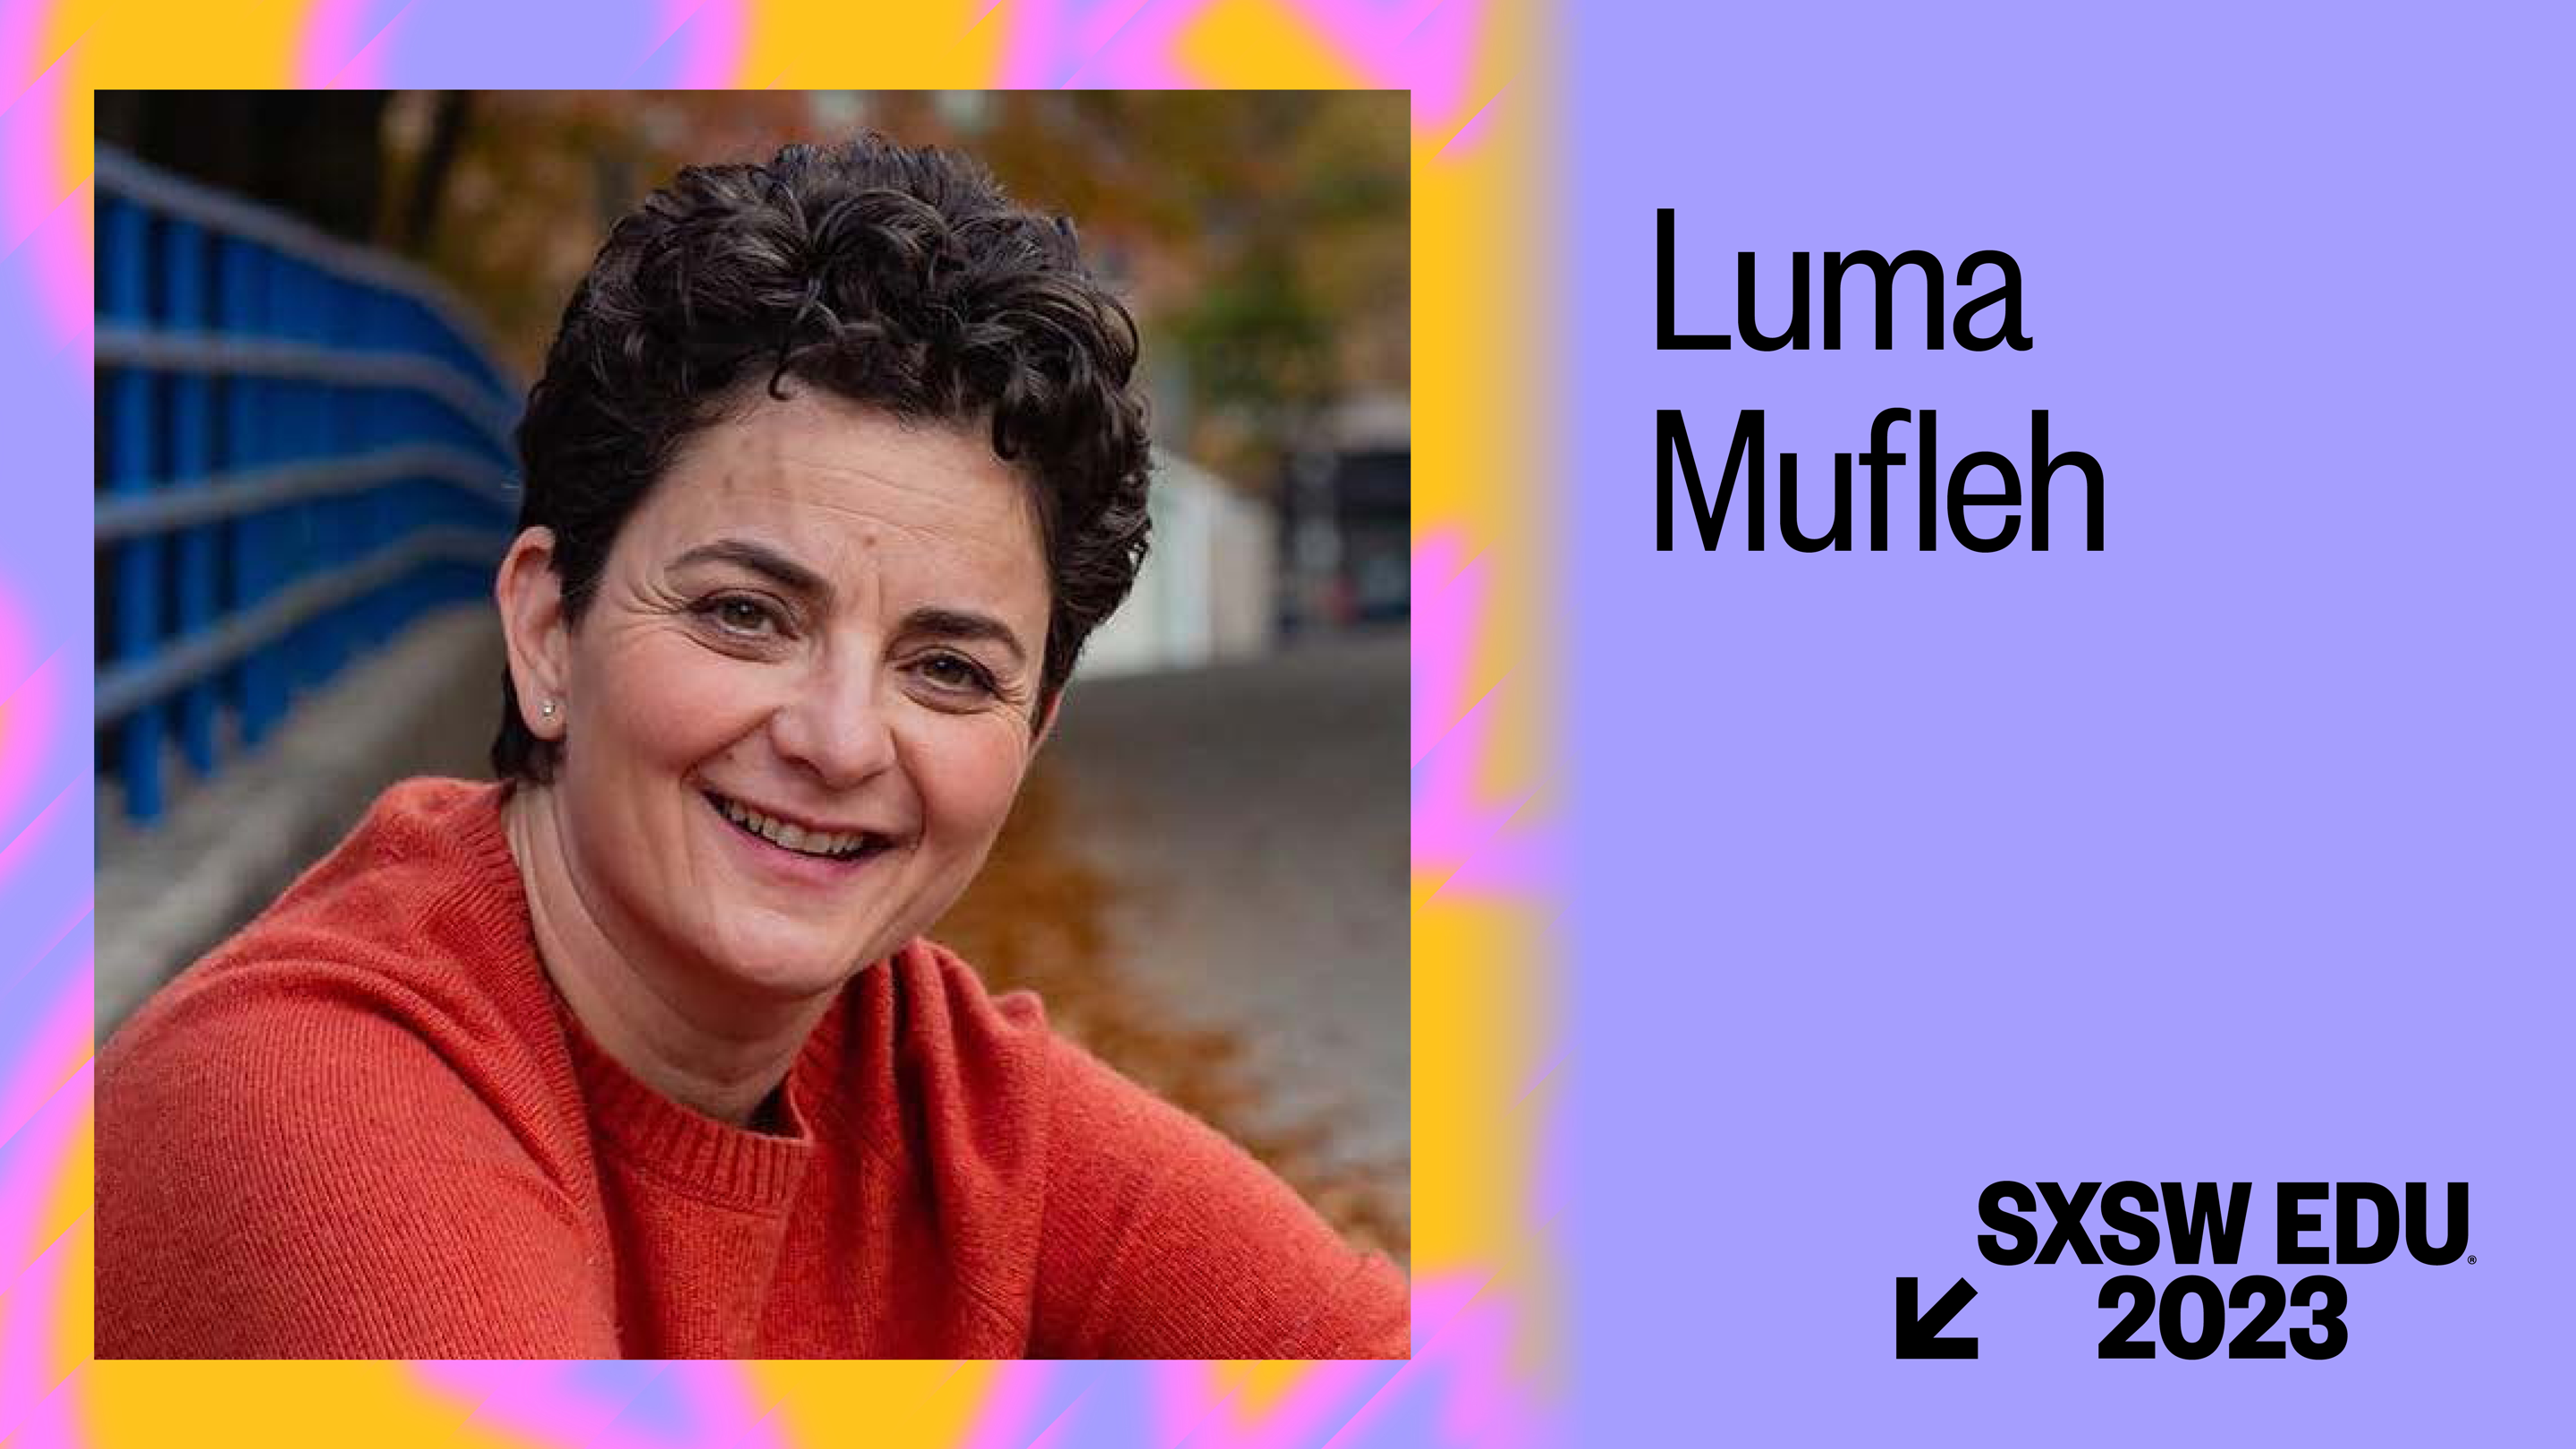 SXSW EDU 2023 Keynote Announcement - Luma Mufleh